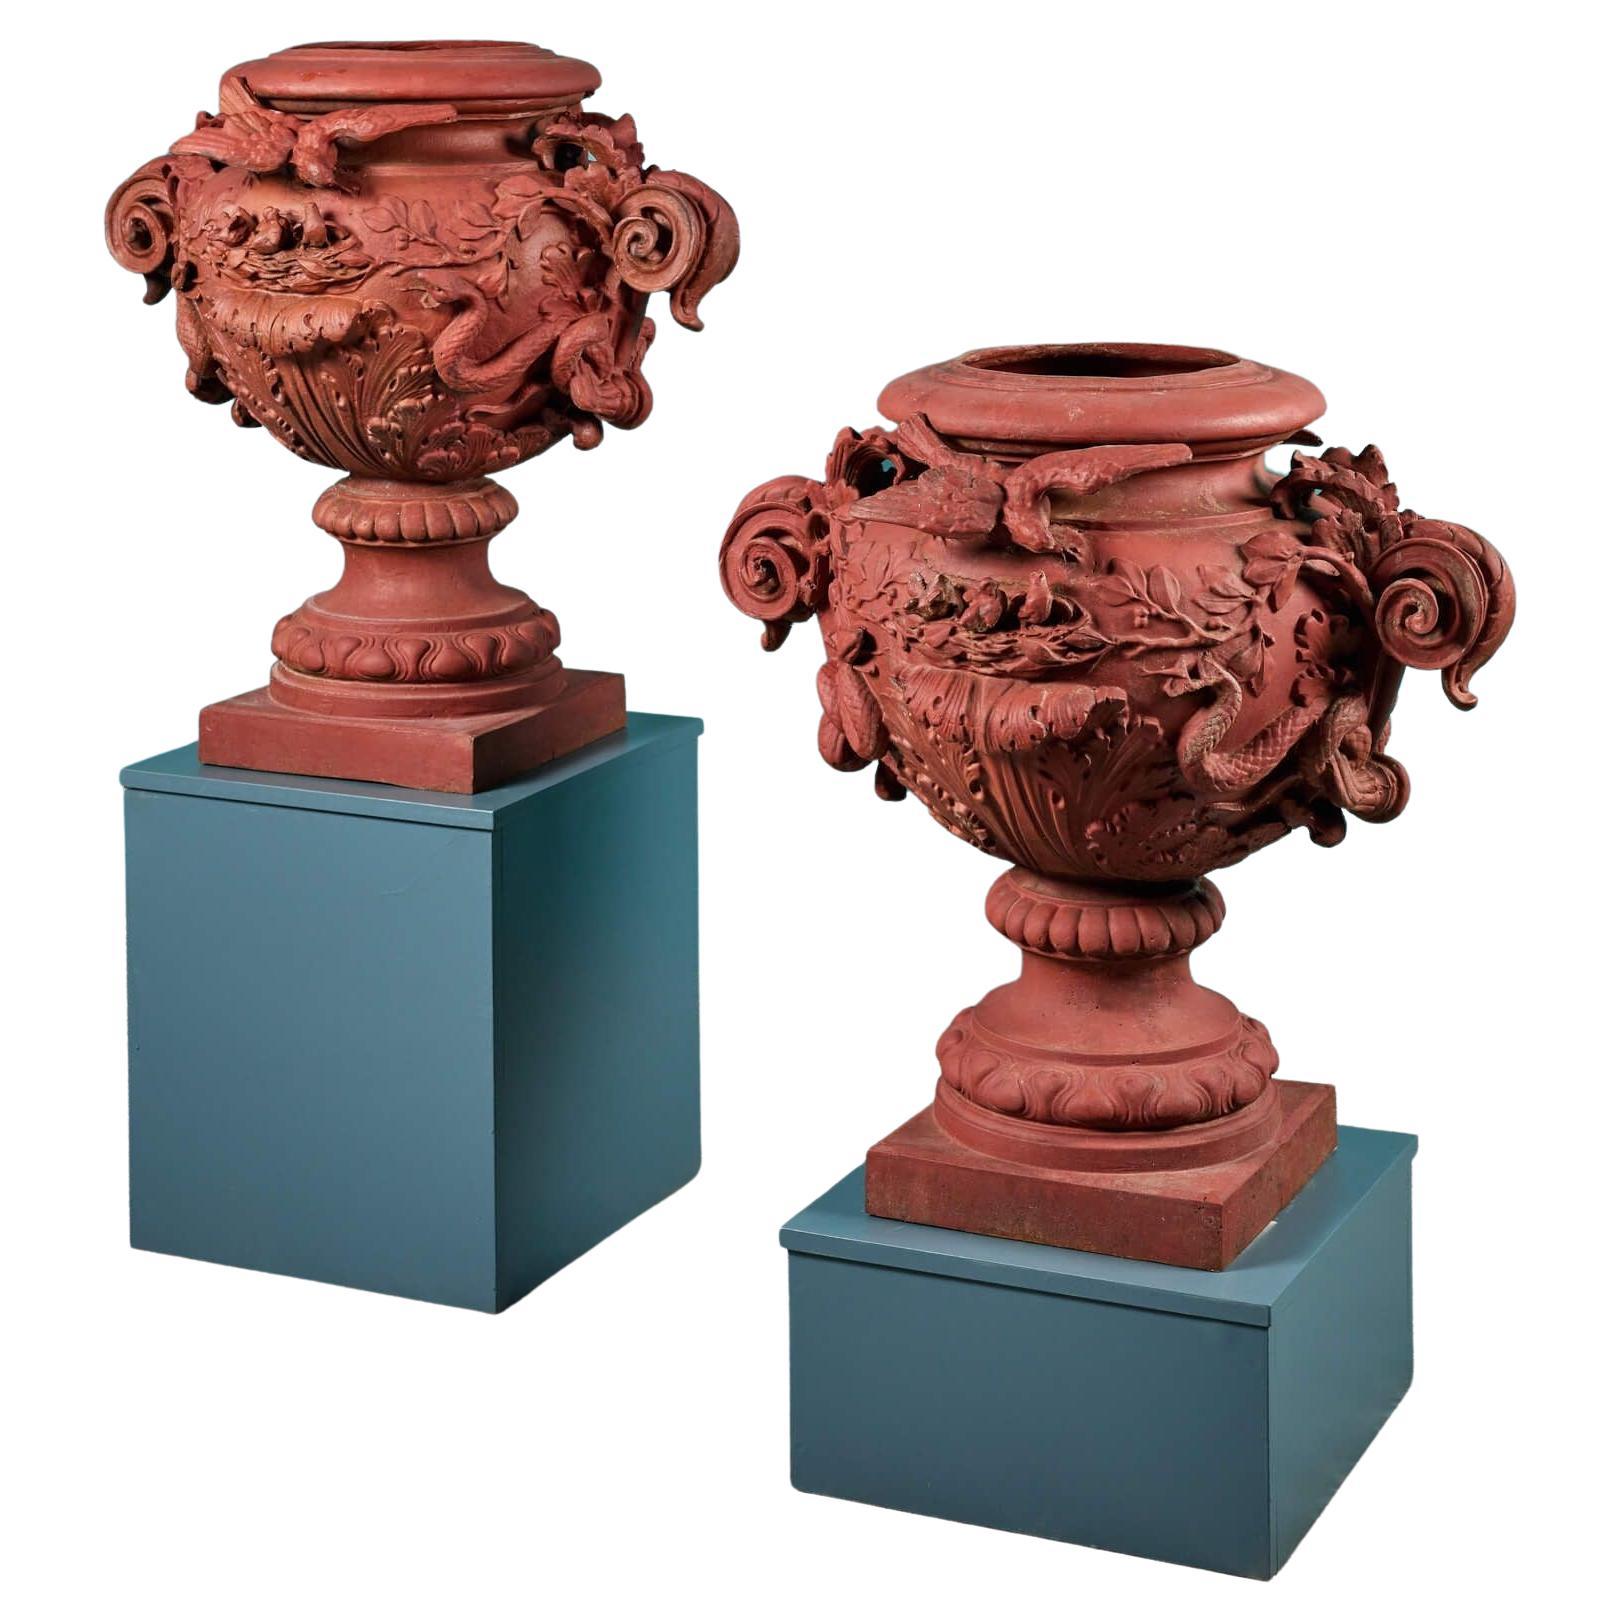 Pair of Elaborate Antique Cast Iron Urns For Sale